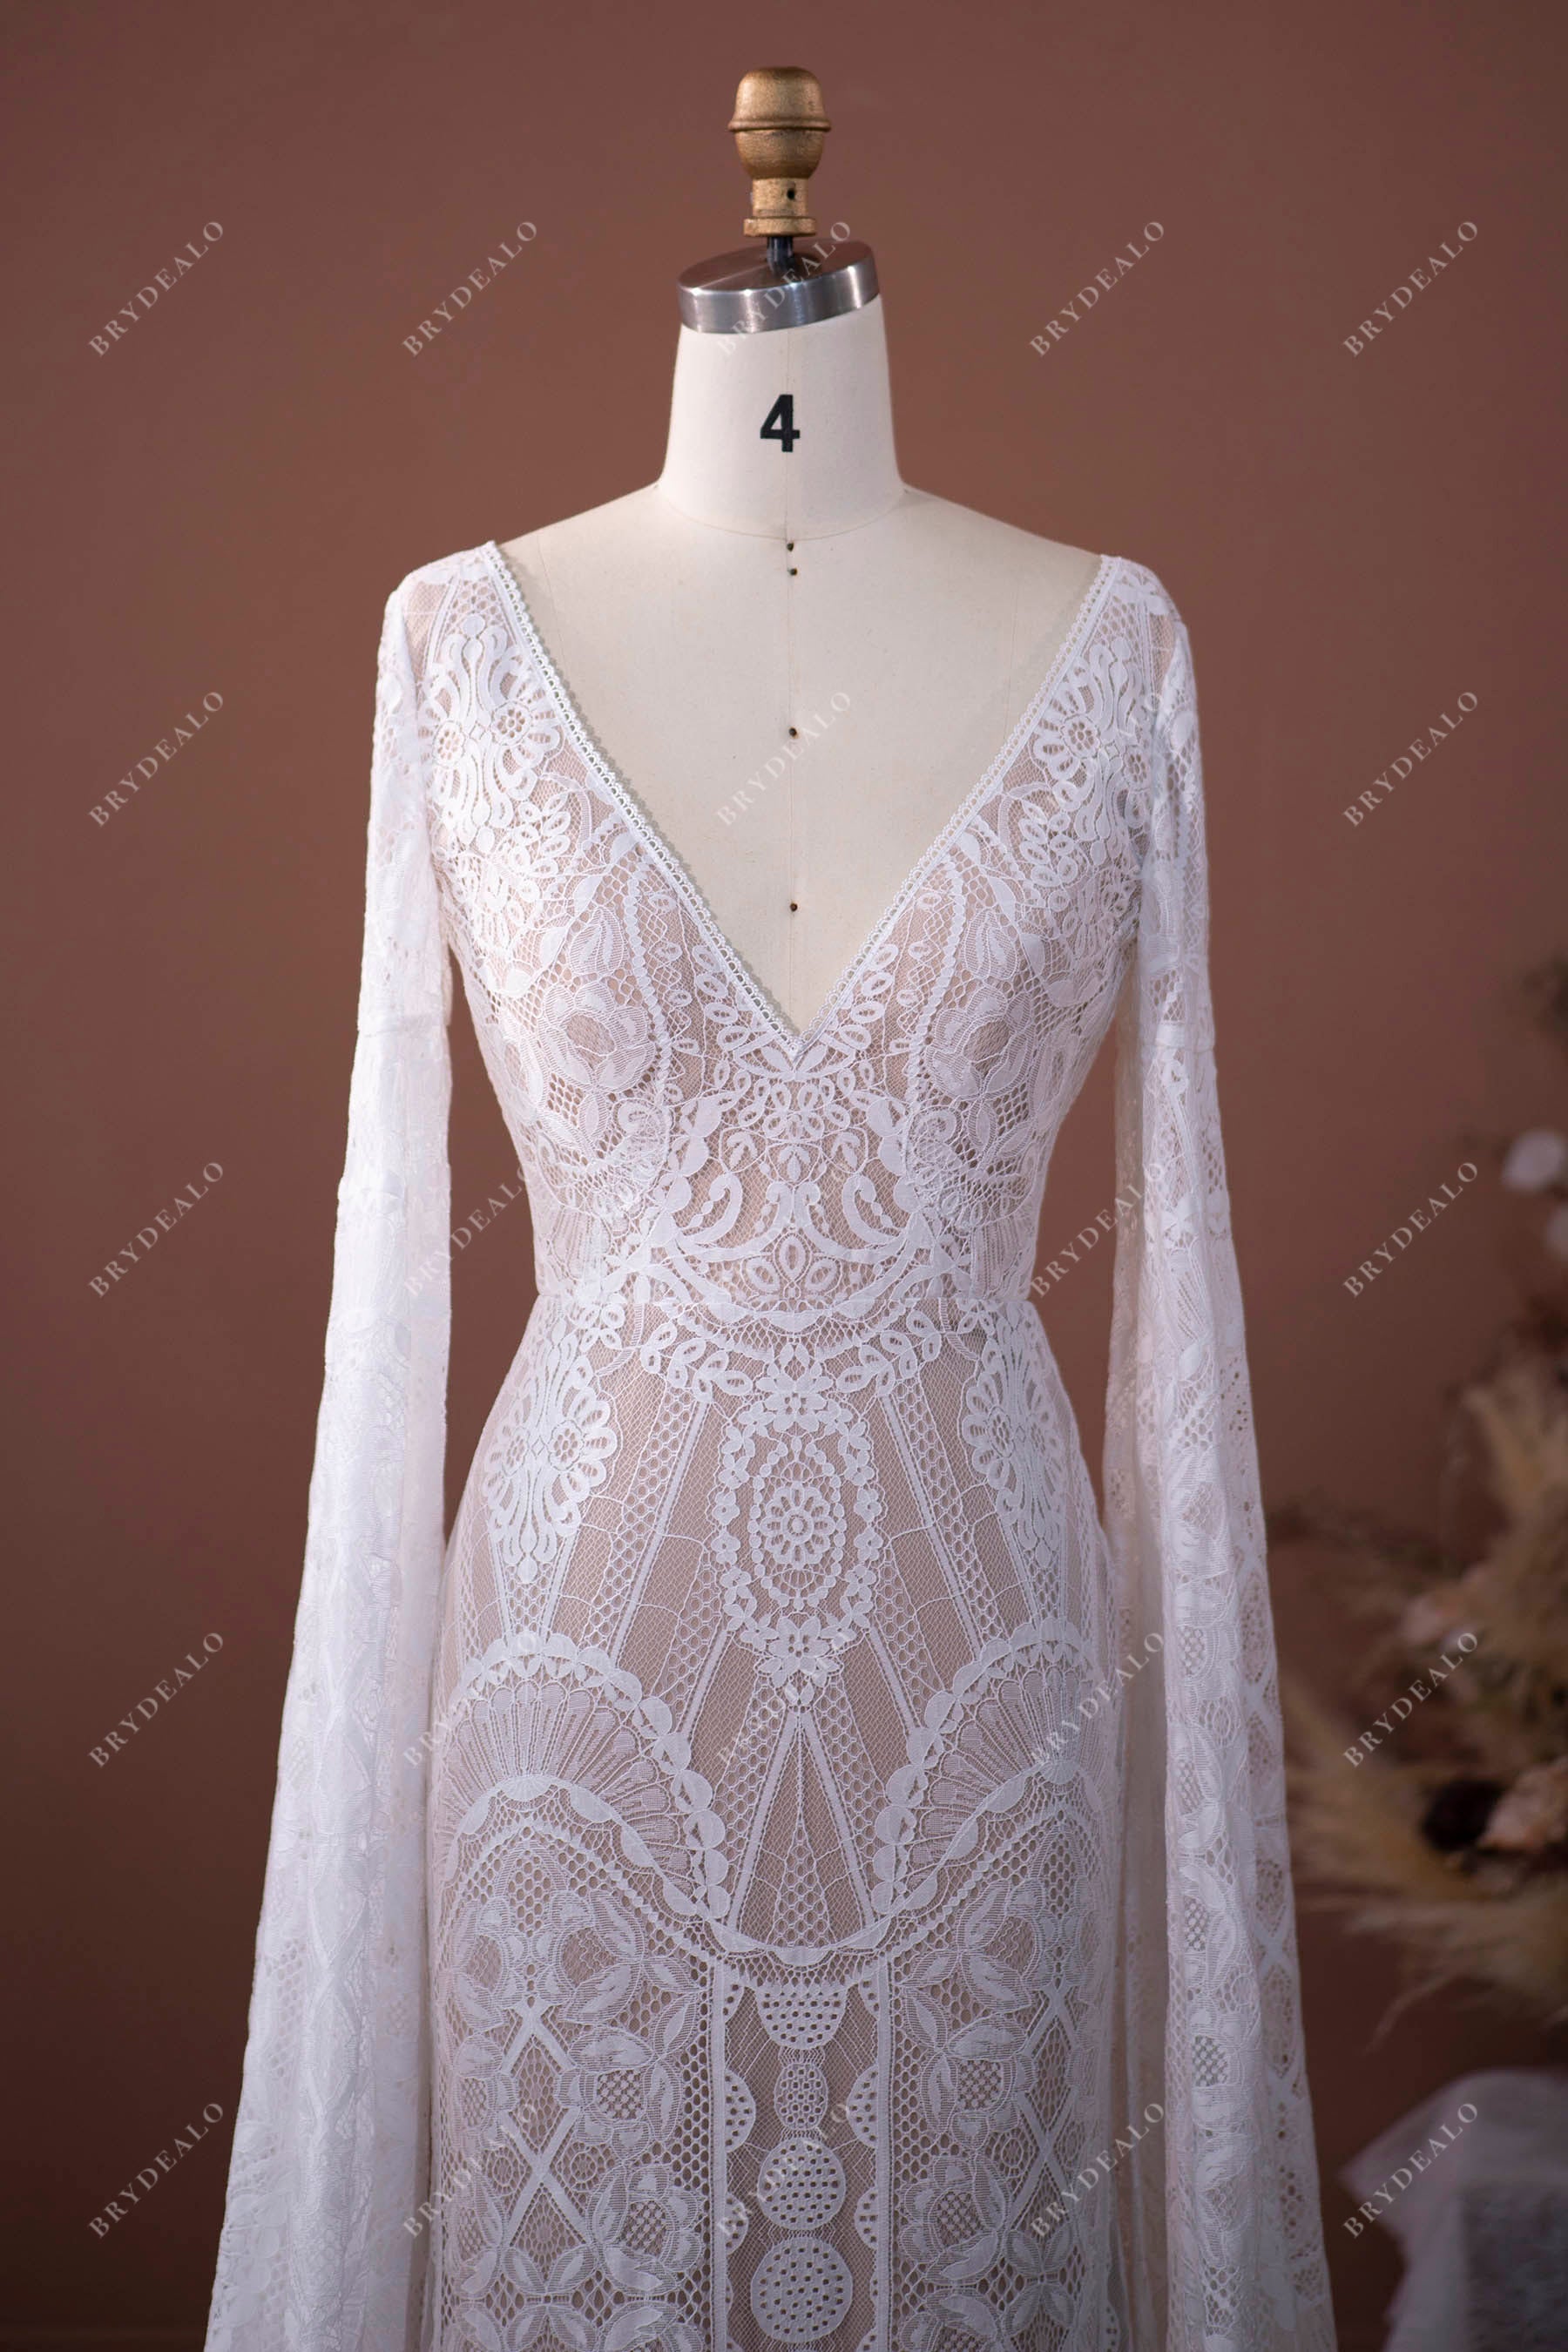 Designer Boho Sleeved Lace Oyster Wedding Dress with Nude Slip